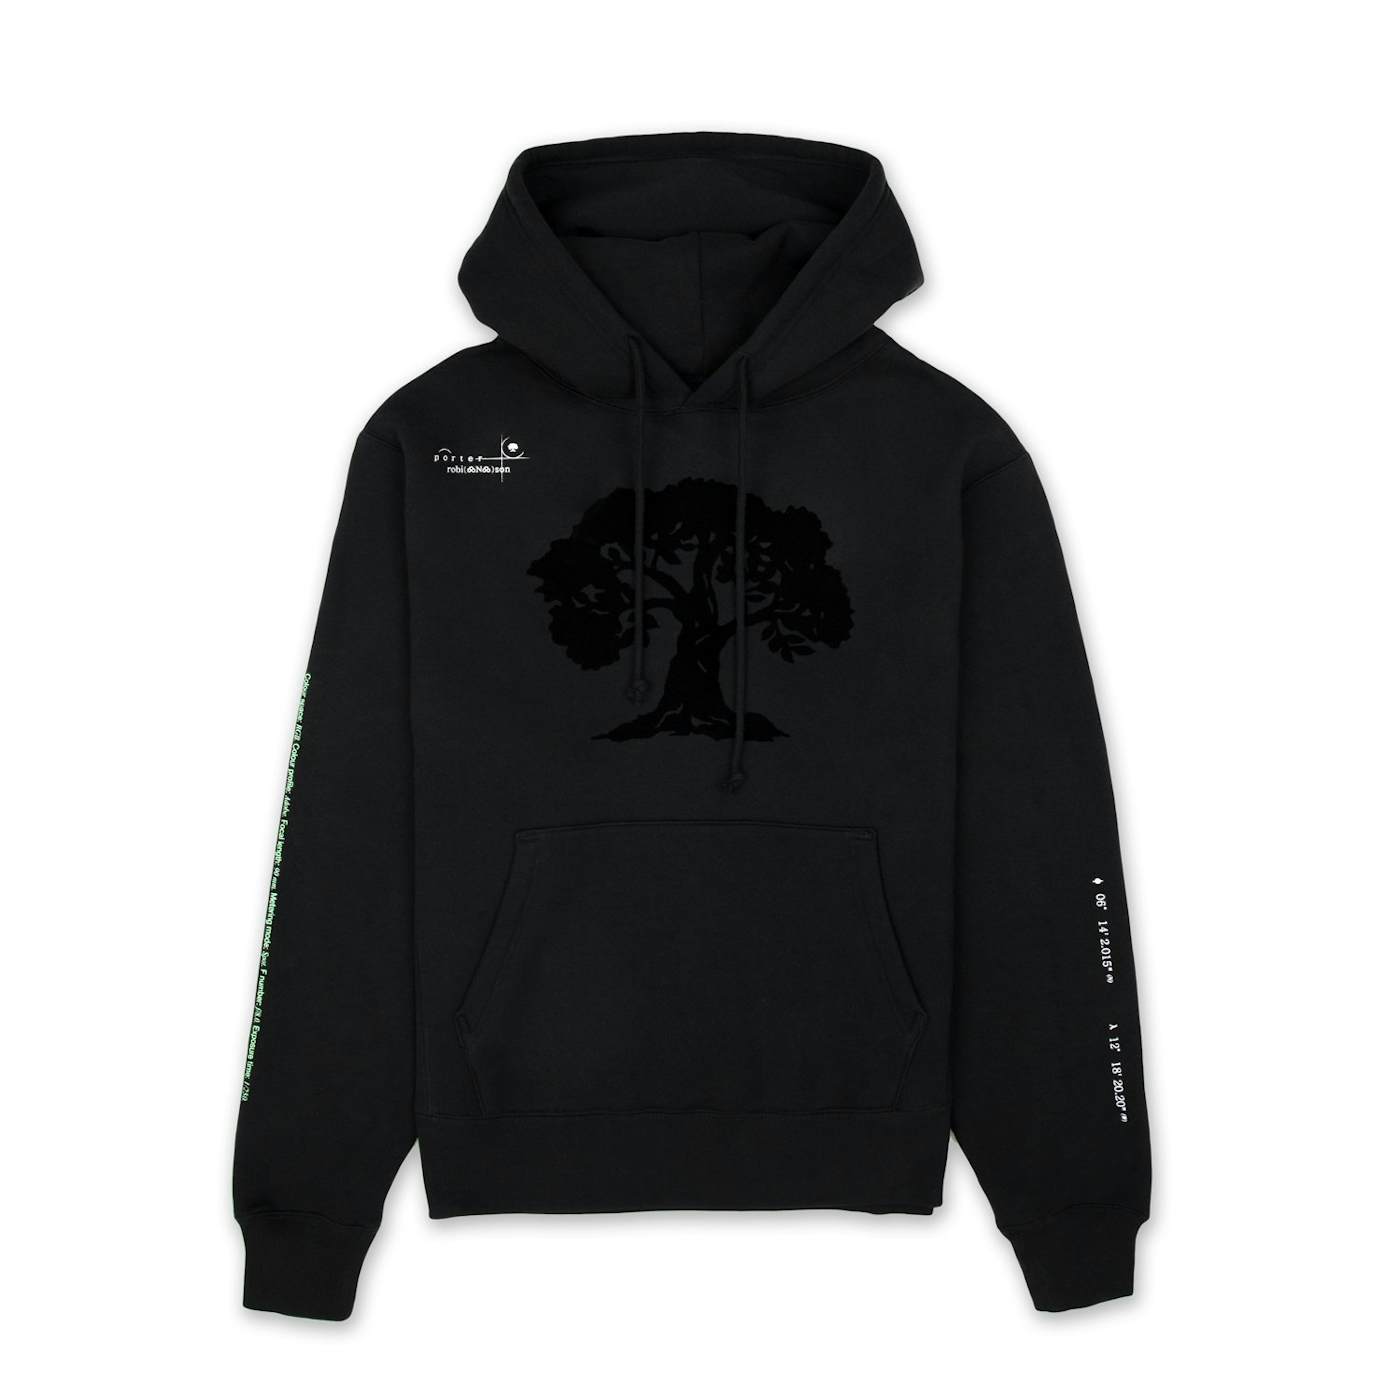 Porter Robinson velvet patch tree hoodie